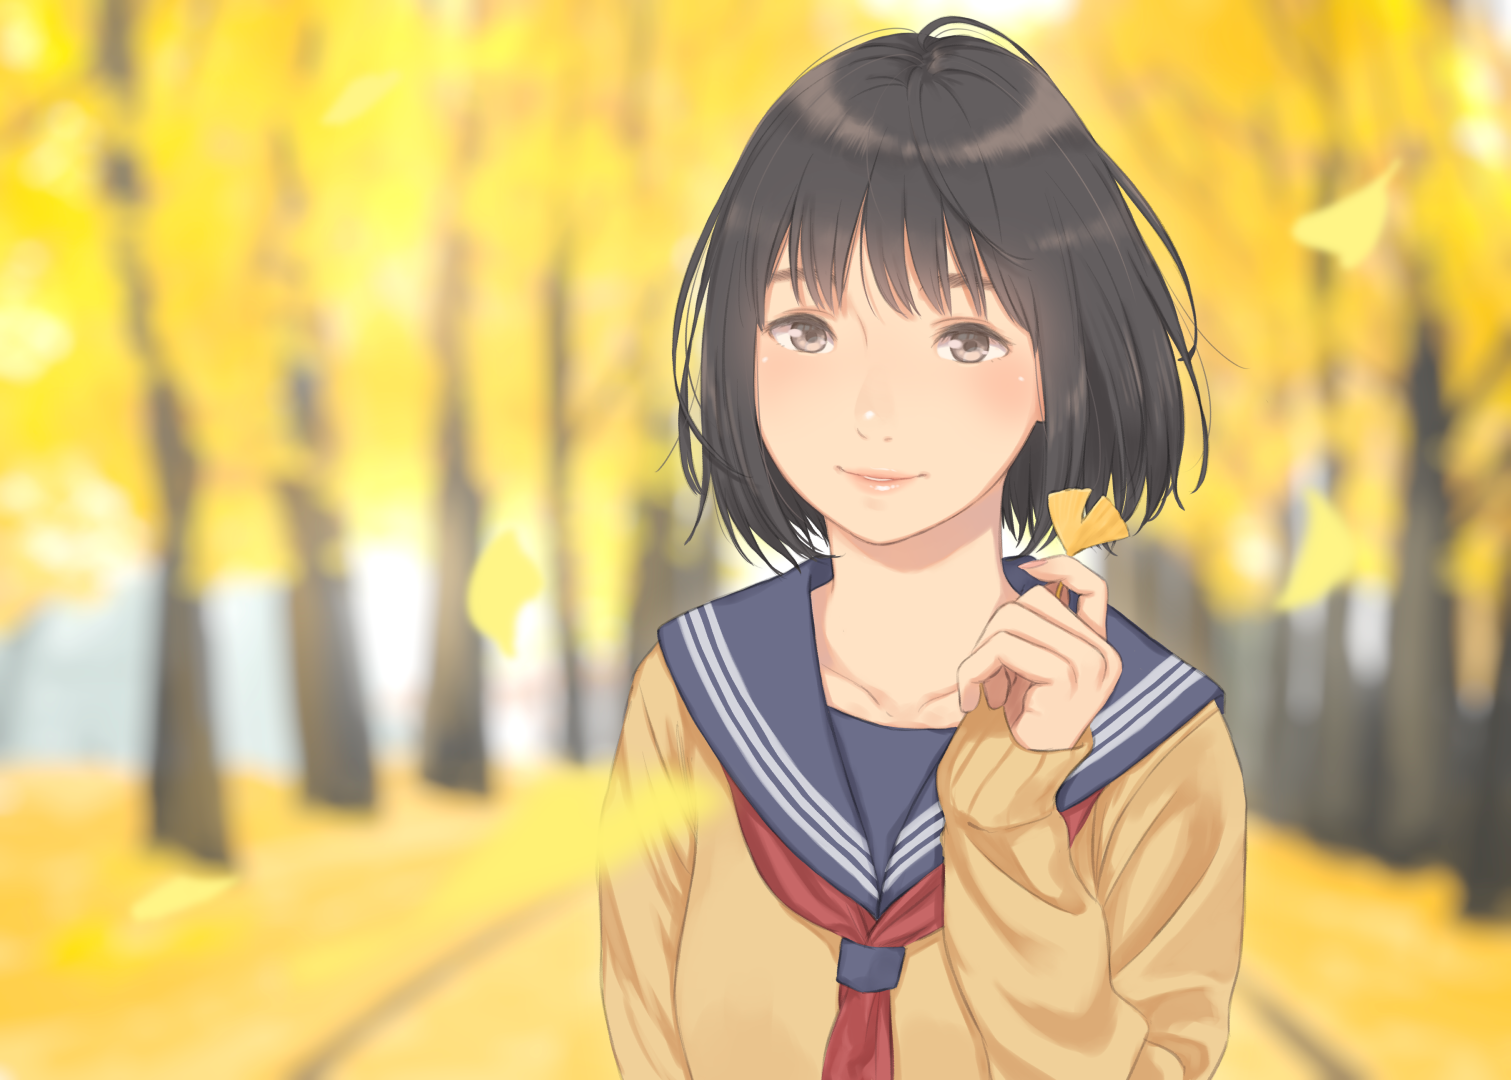 Anime Anime Girls Short Hair Fall Black Hair Smiling Looking At Viewer Long Nails Trees Sailor Unifo 1511x1080